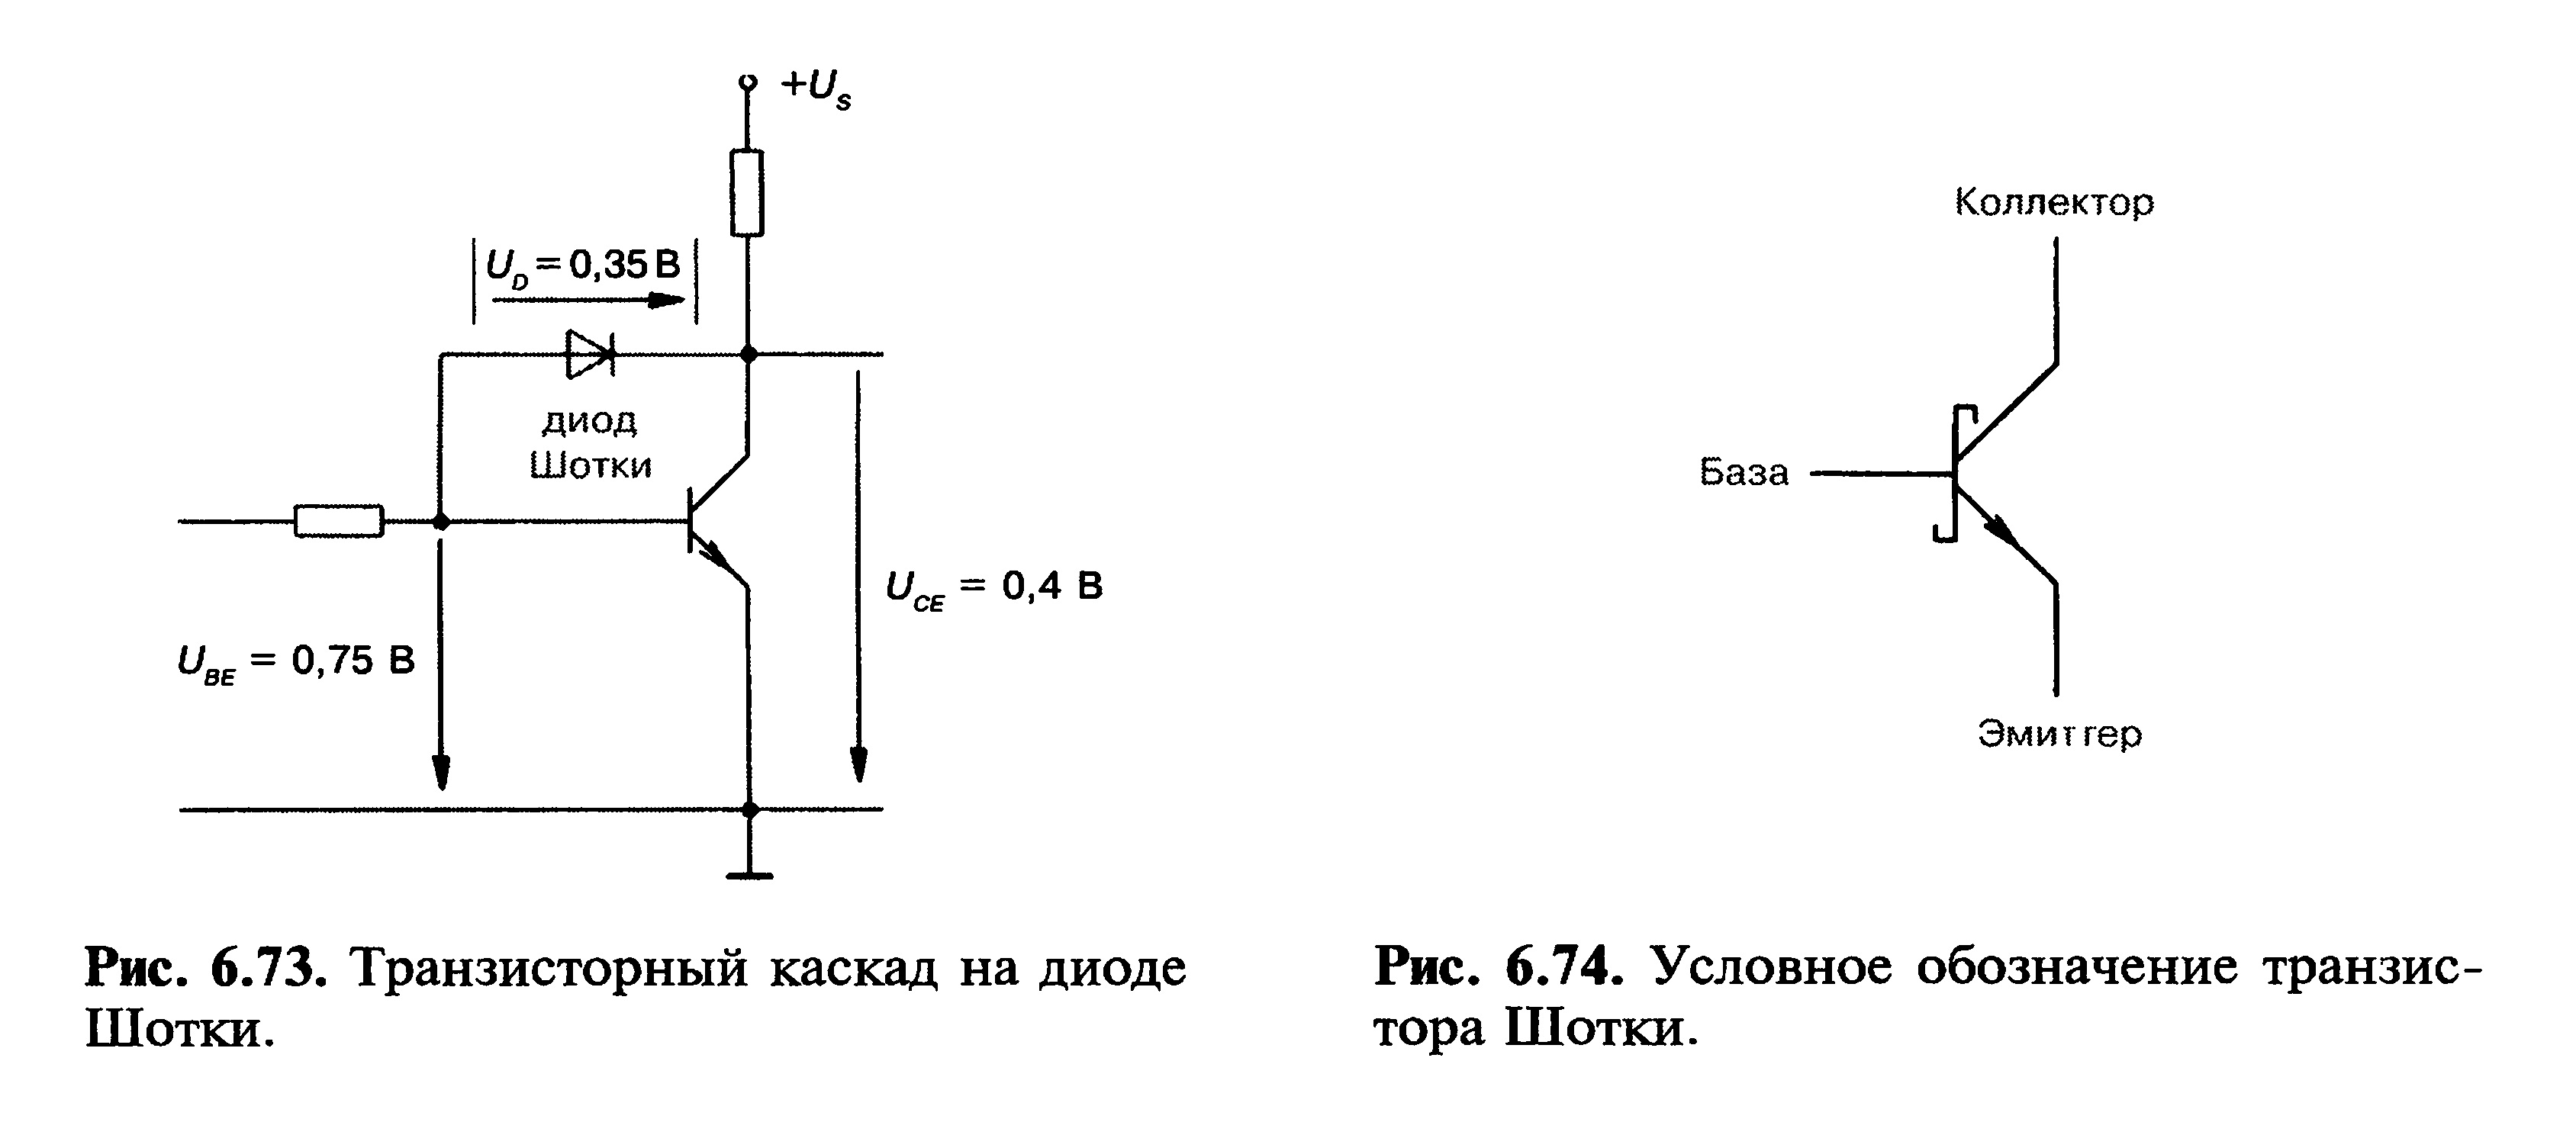 Транзисторный каскад на диоде Шотки